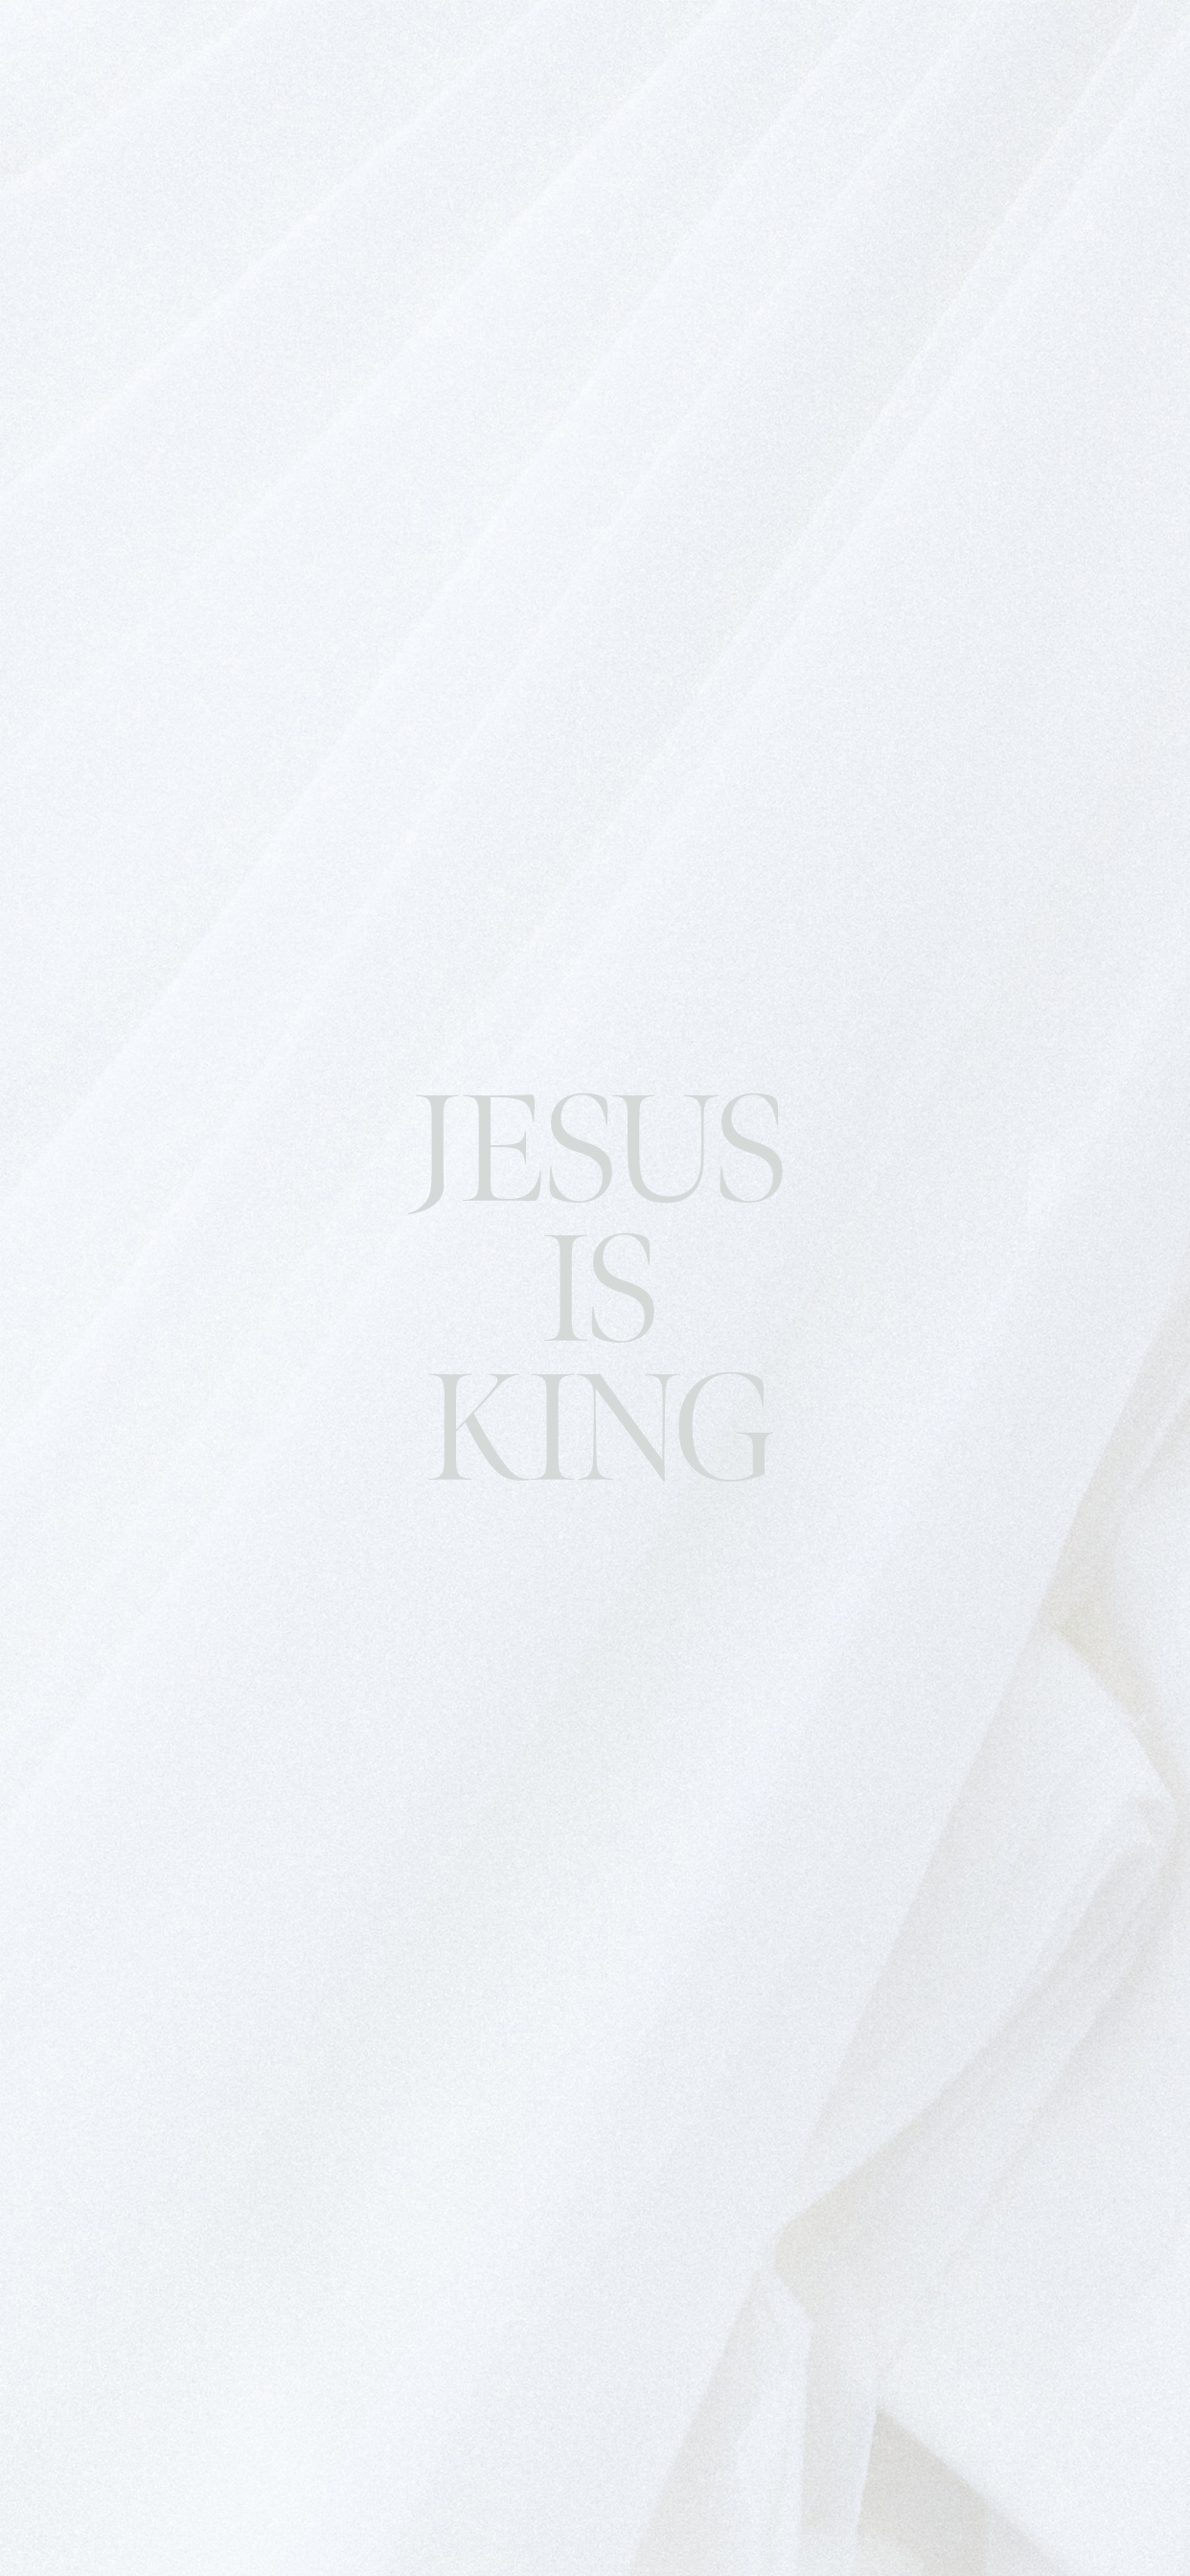 I made a Jesus Is King wallpaper 1920x1080  rKanye